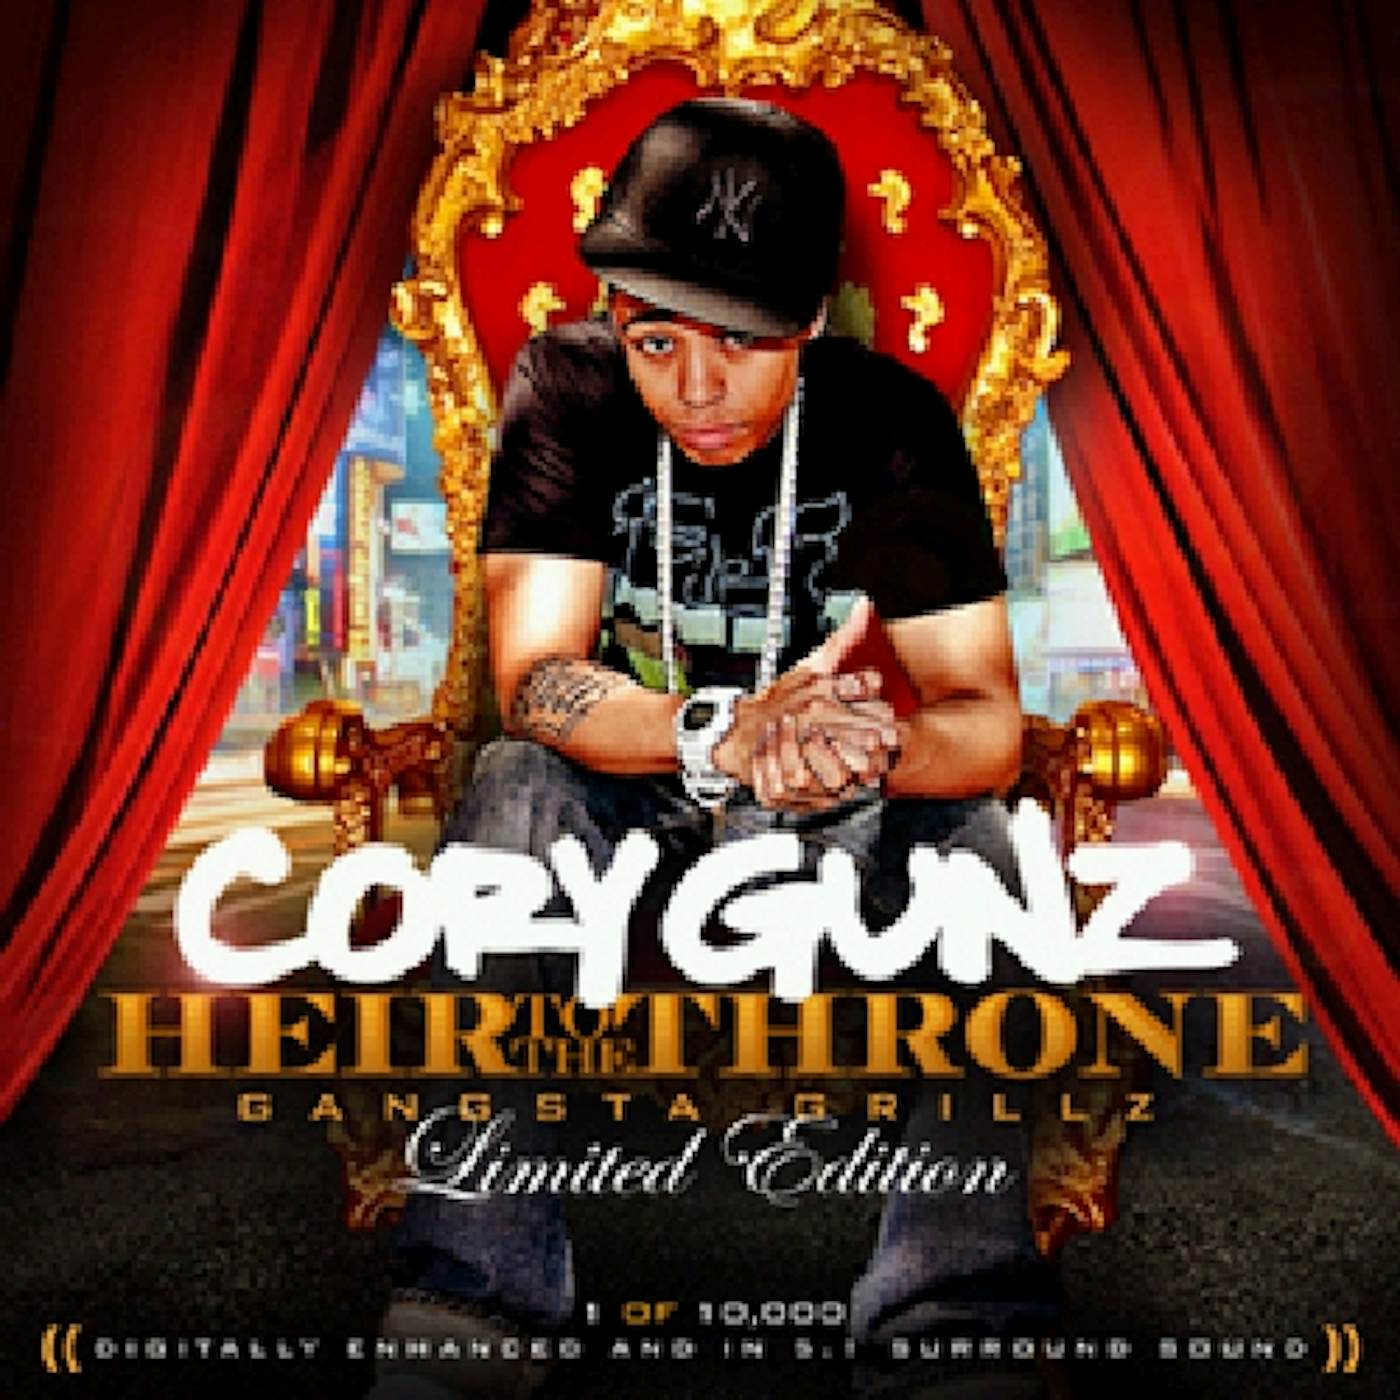 Cory Gunz HEIR TO THE THRONE CD